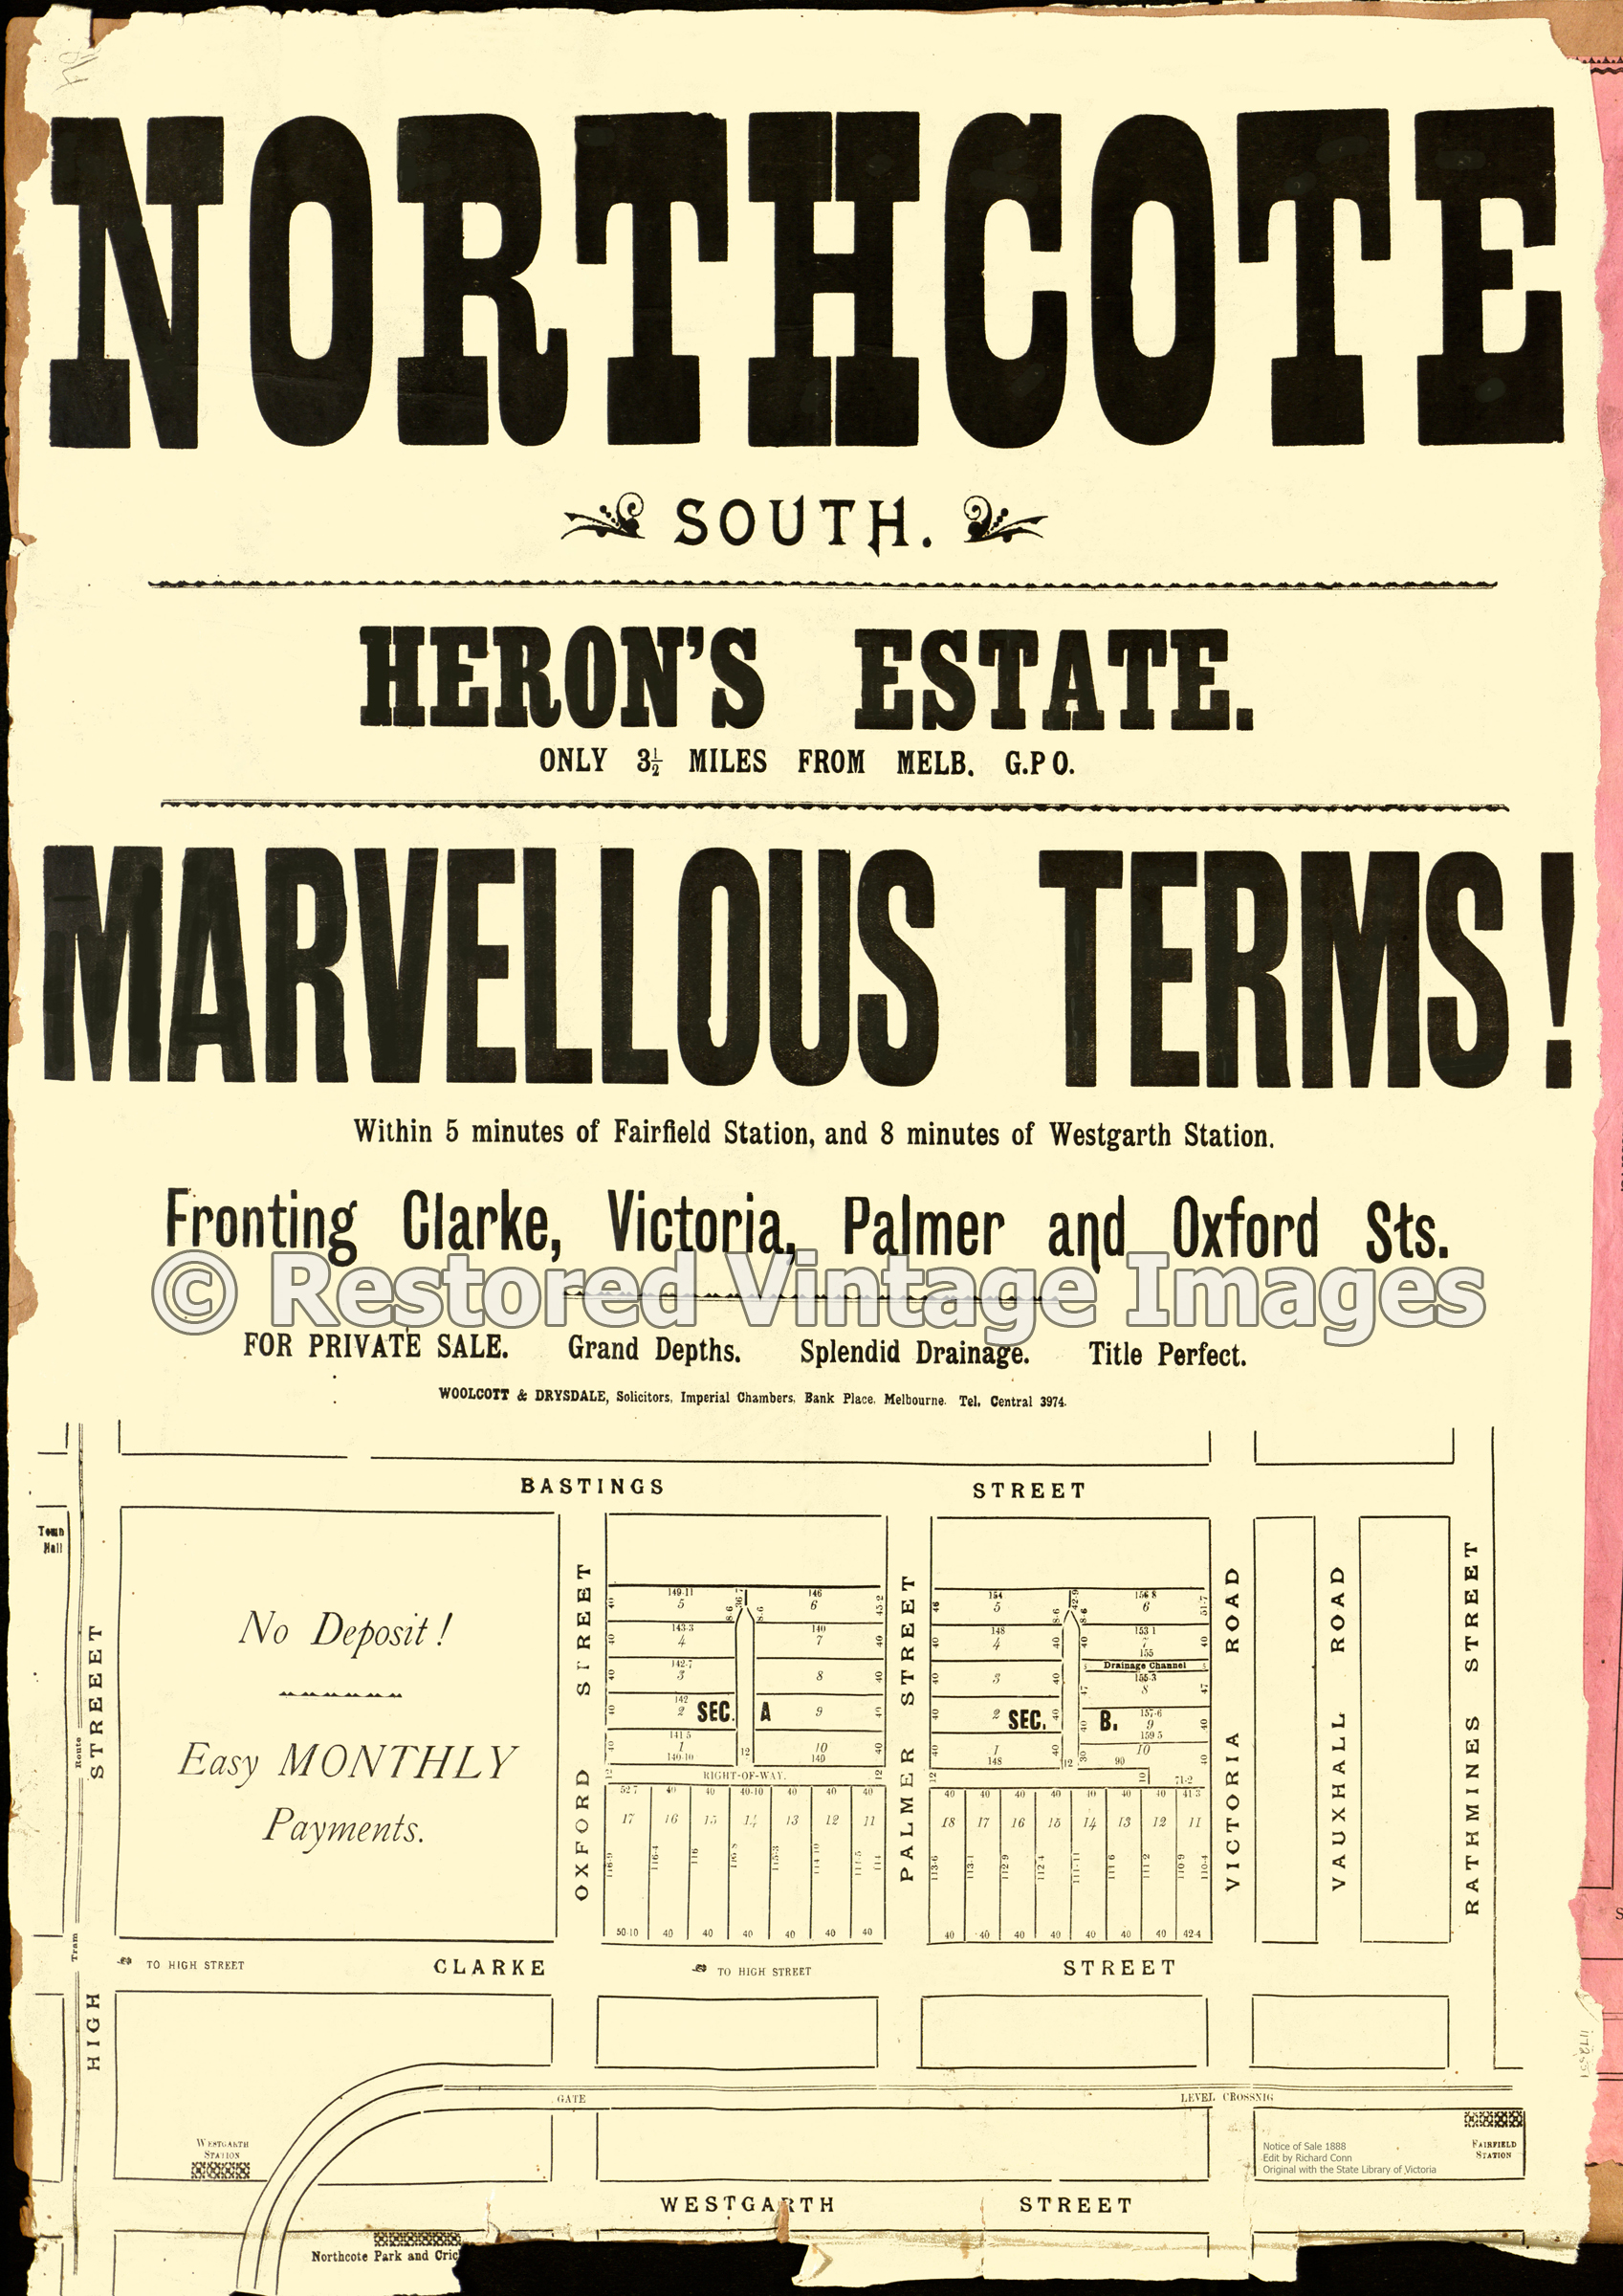 Heron’s Estate Northcote South 1888 – Northcote